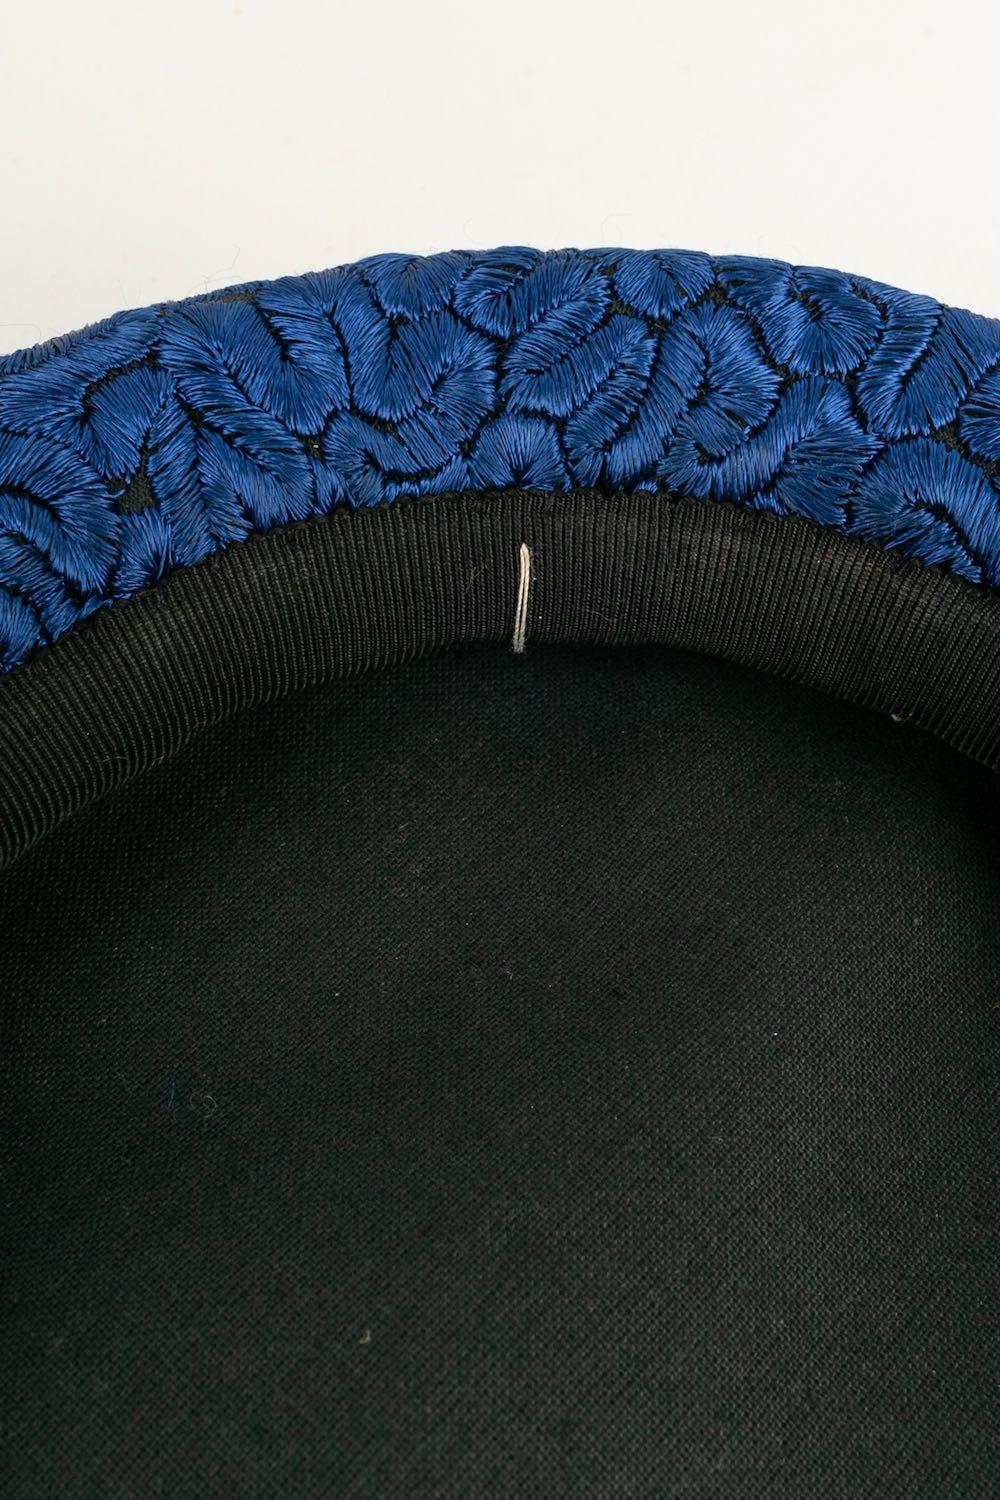 Yves Saint Laurent Black and Blue Hat/Bibi For Sale 3